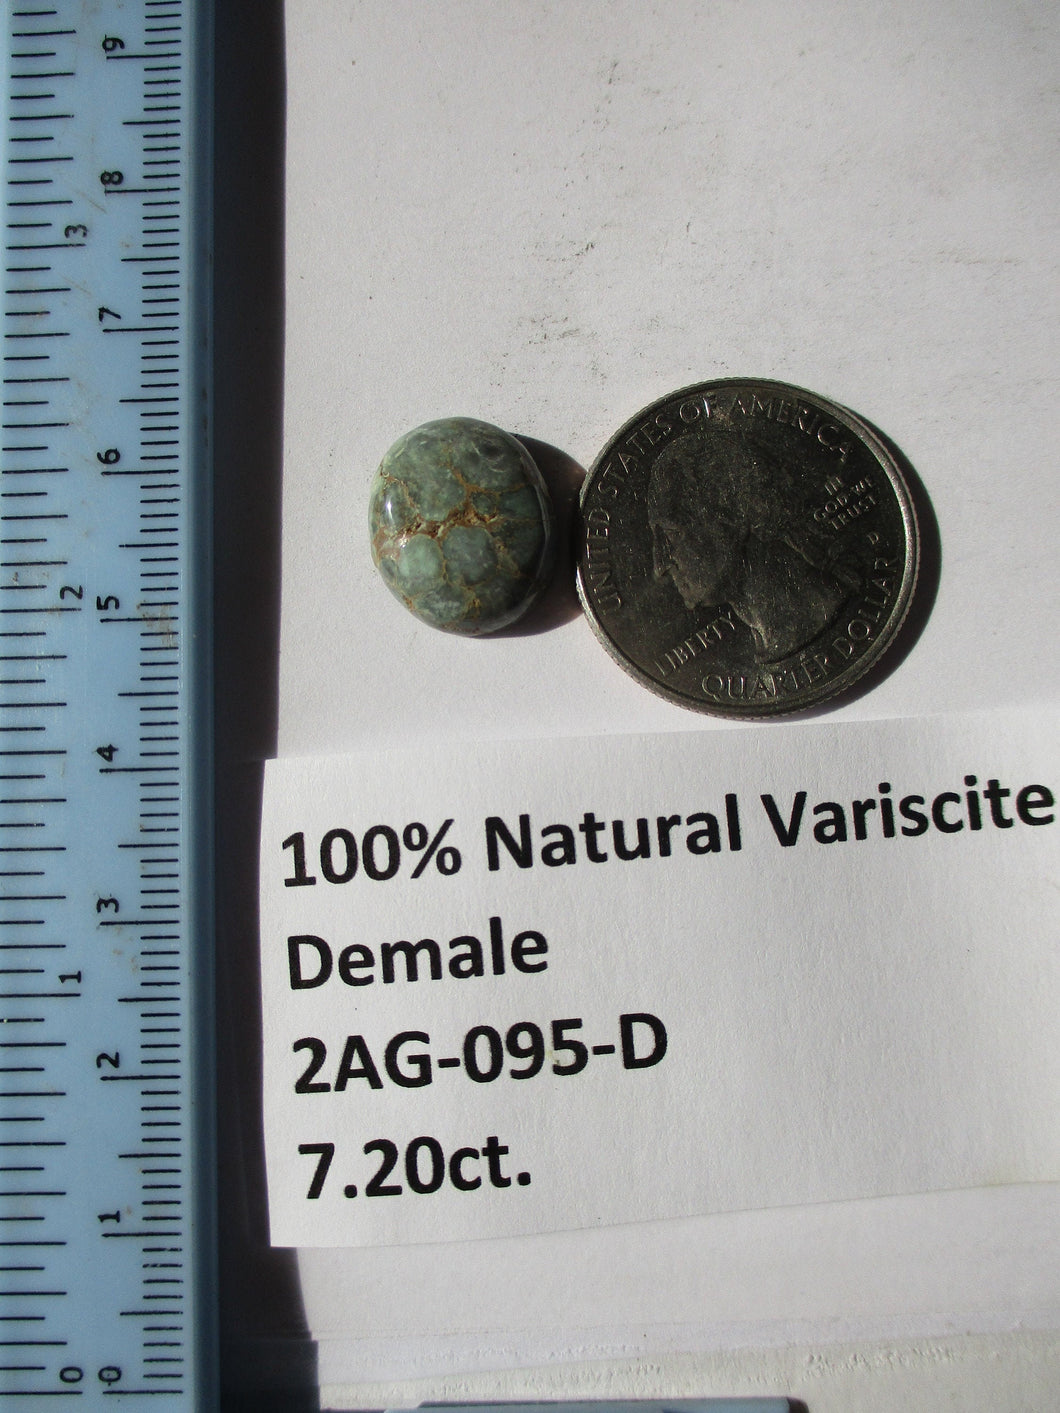 7.2 ct. (15x13x5 mm) 100% Natural Damele Variscite Cabochon Gemstone, # 2AG 095 s